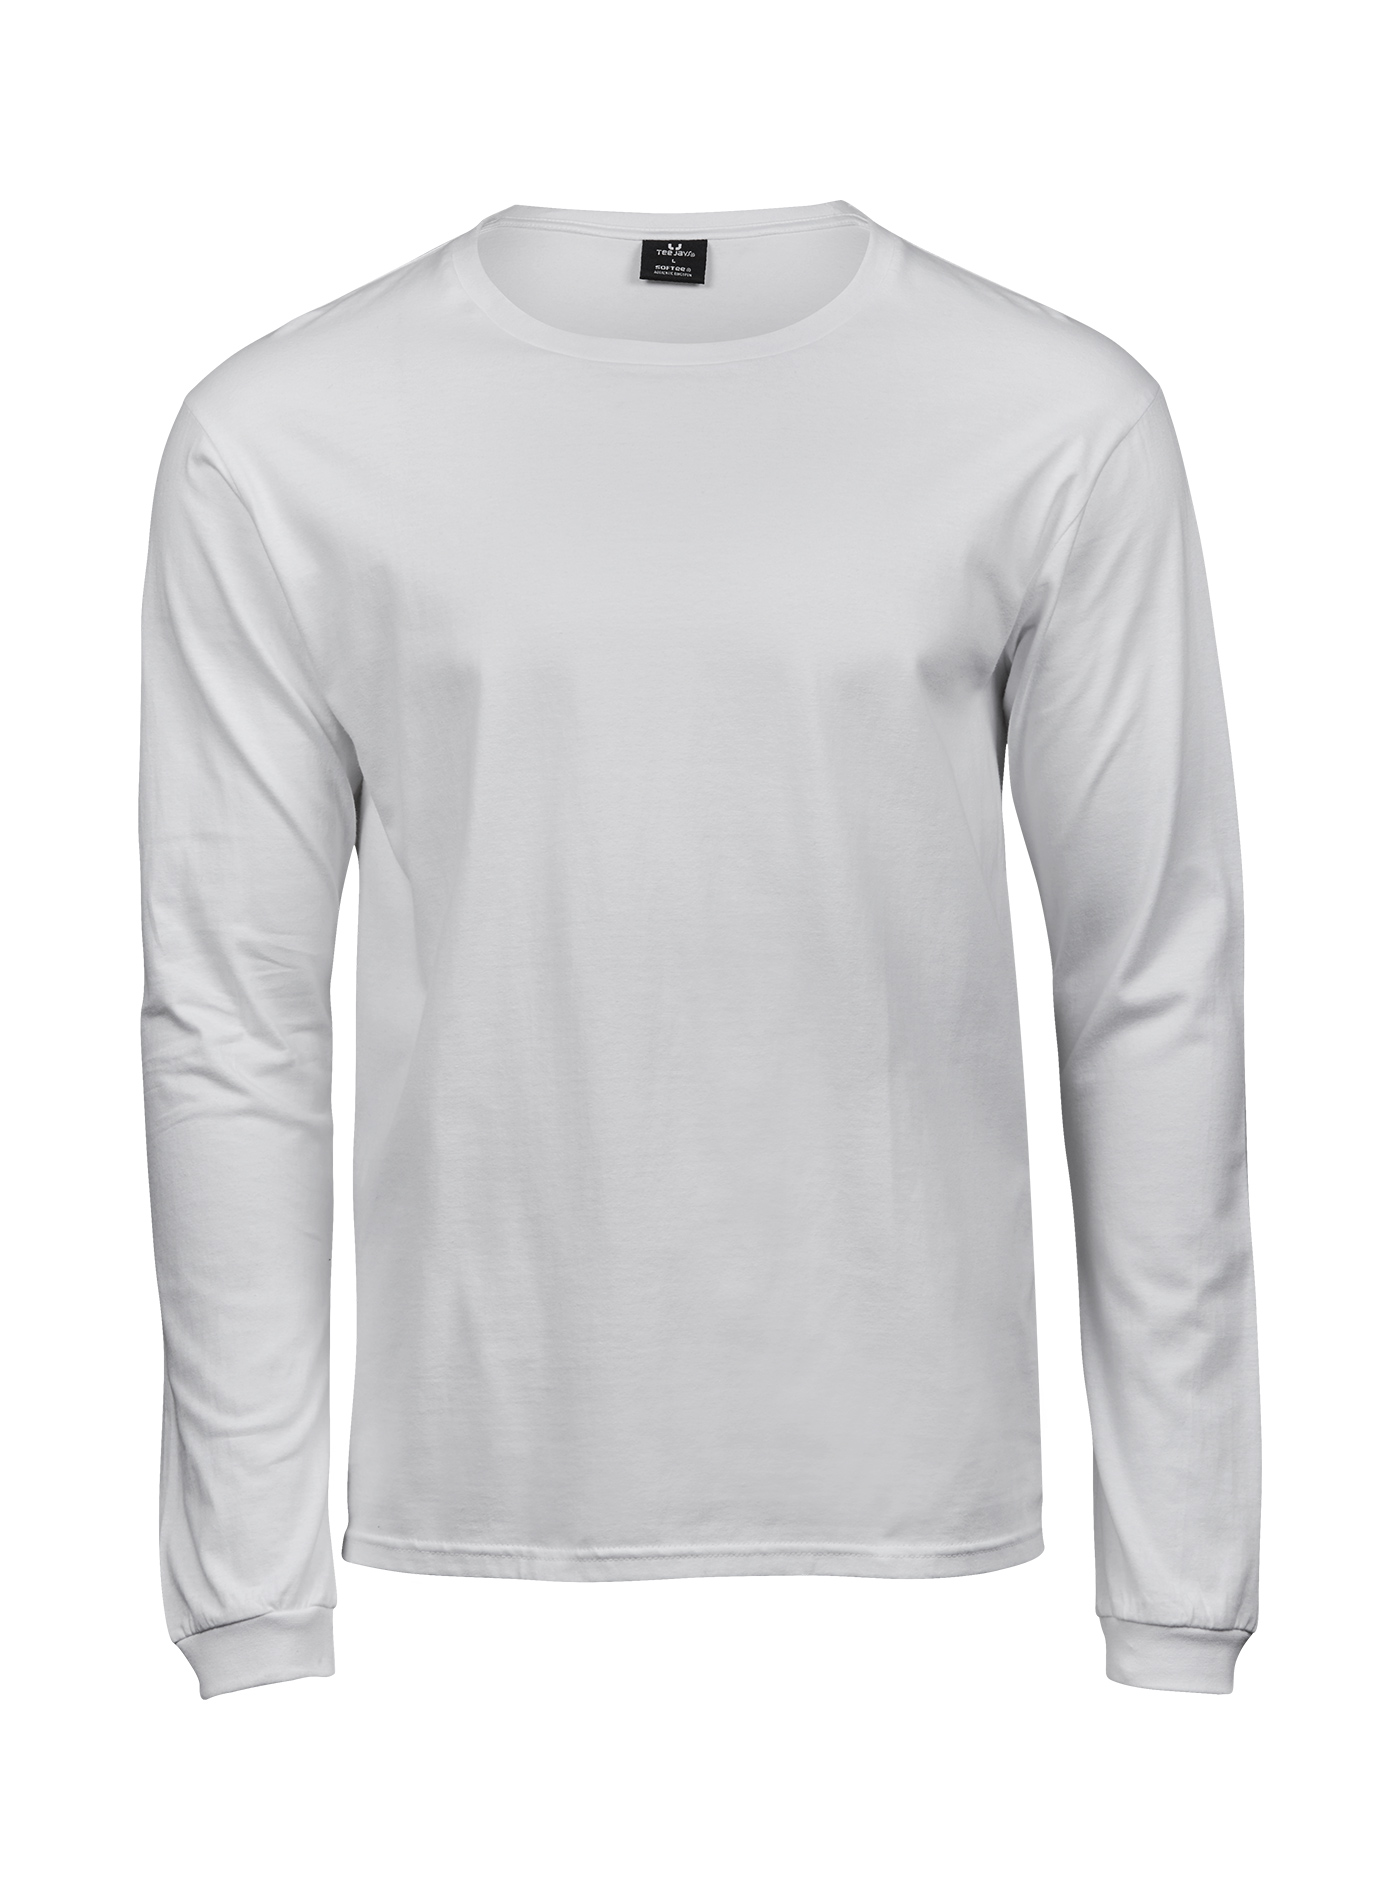 Pánské tričko s dlouhým rukávem Sof-Tee Jays - Bílá 4XL